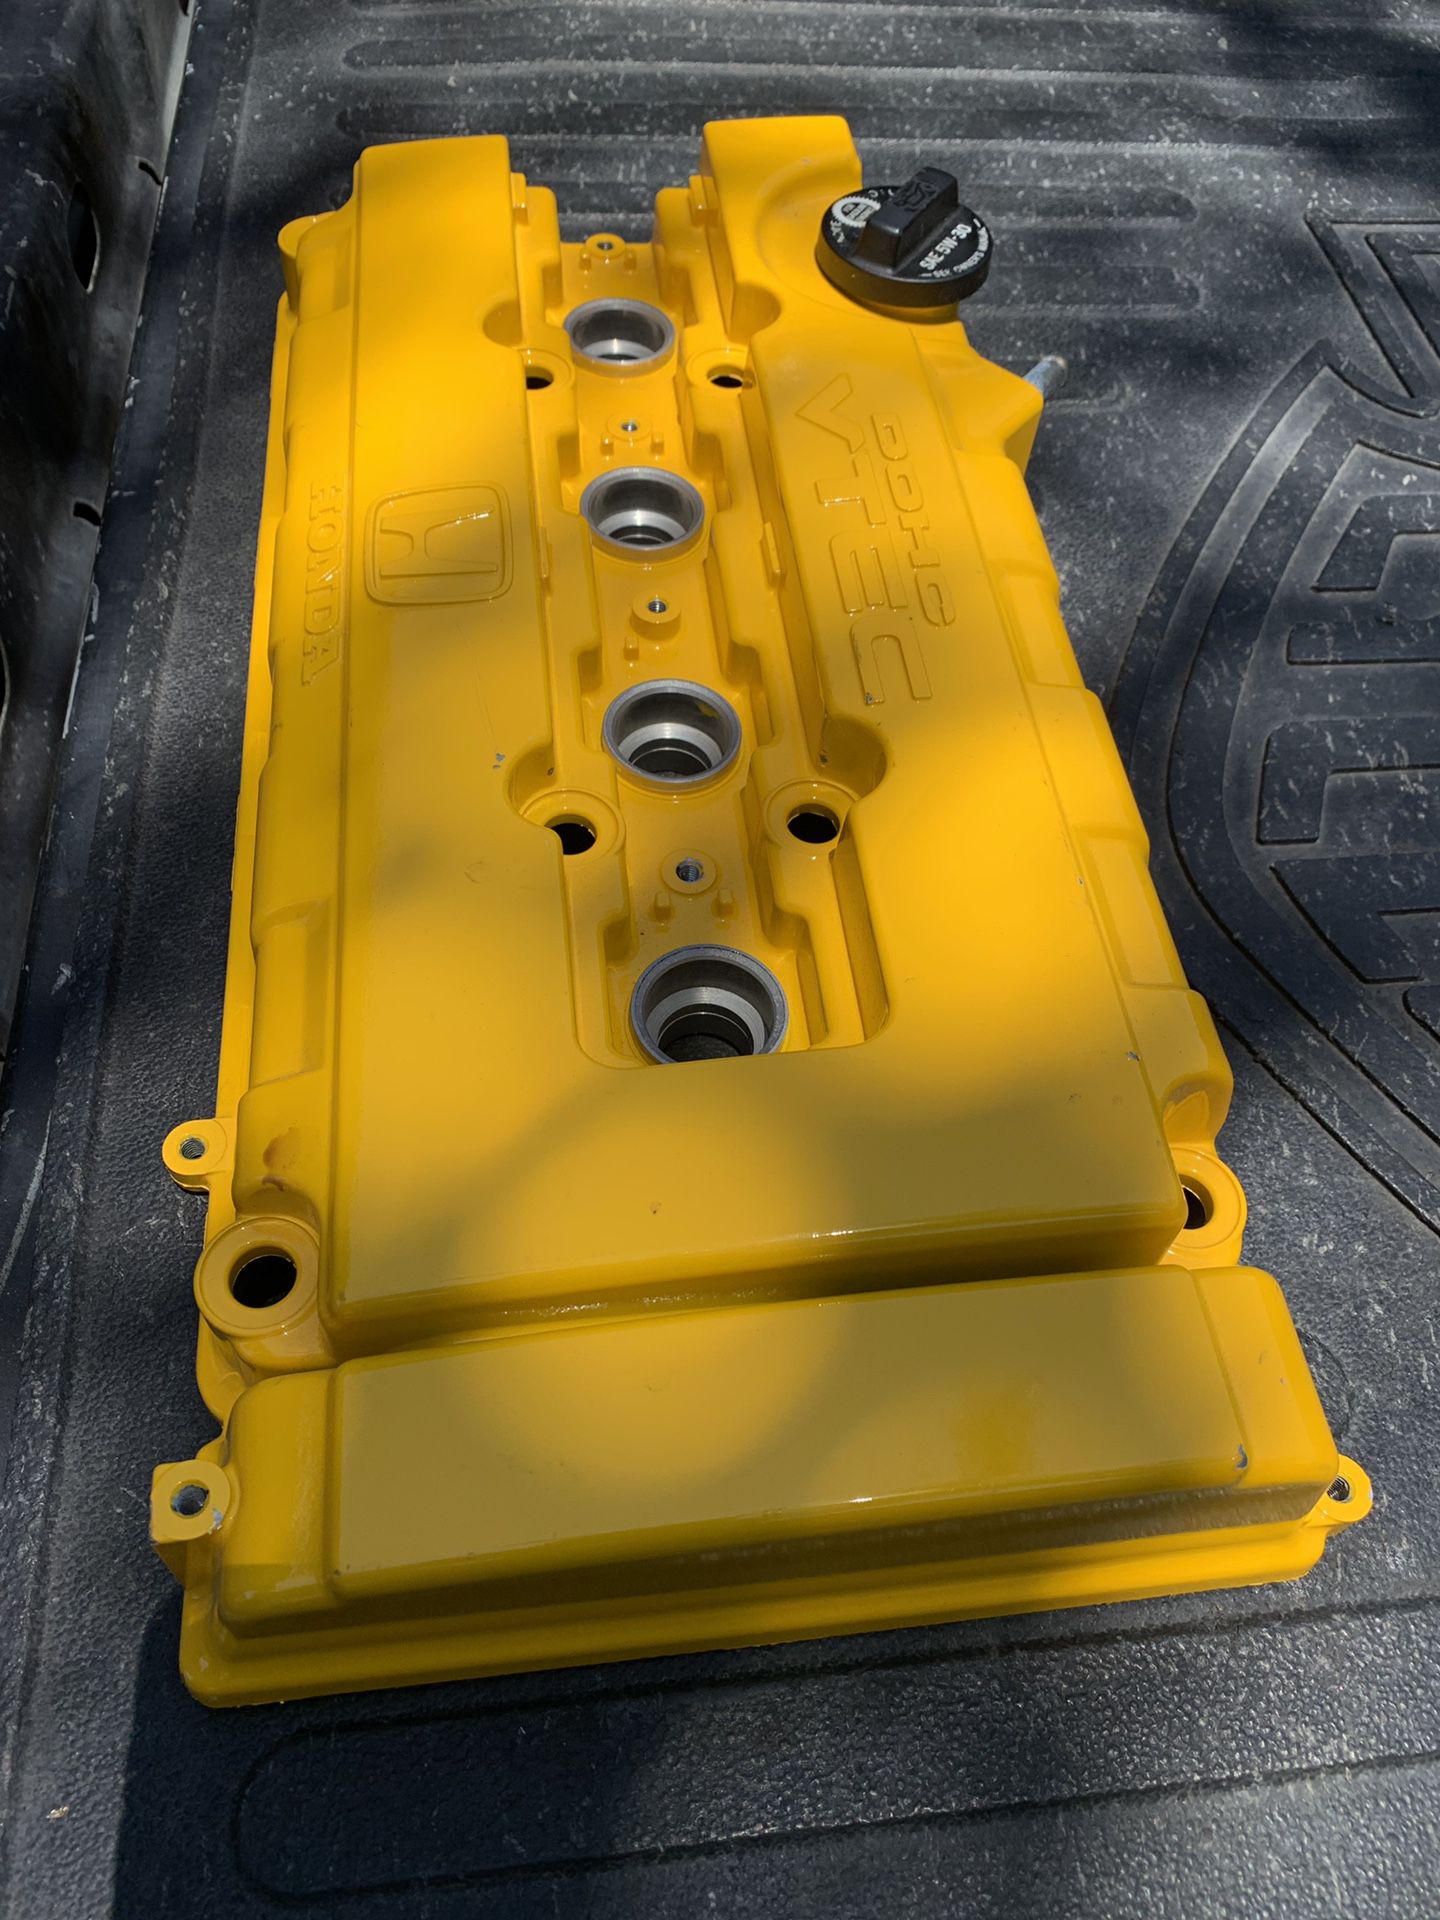 Gsr valve cover integra